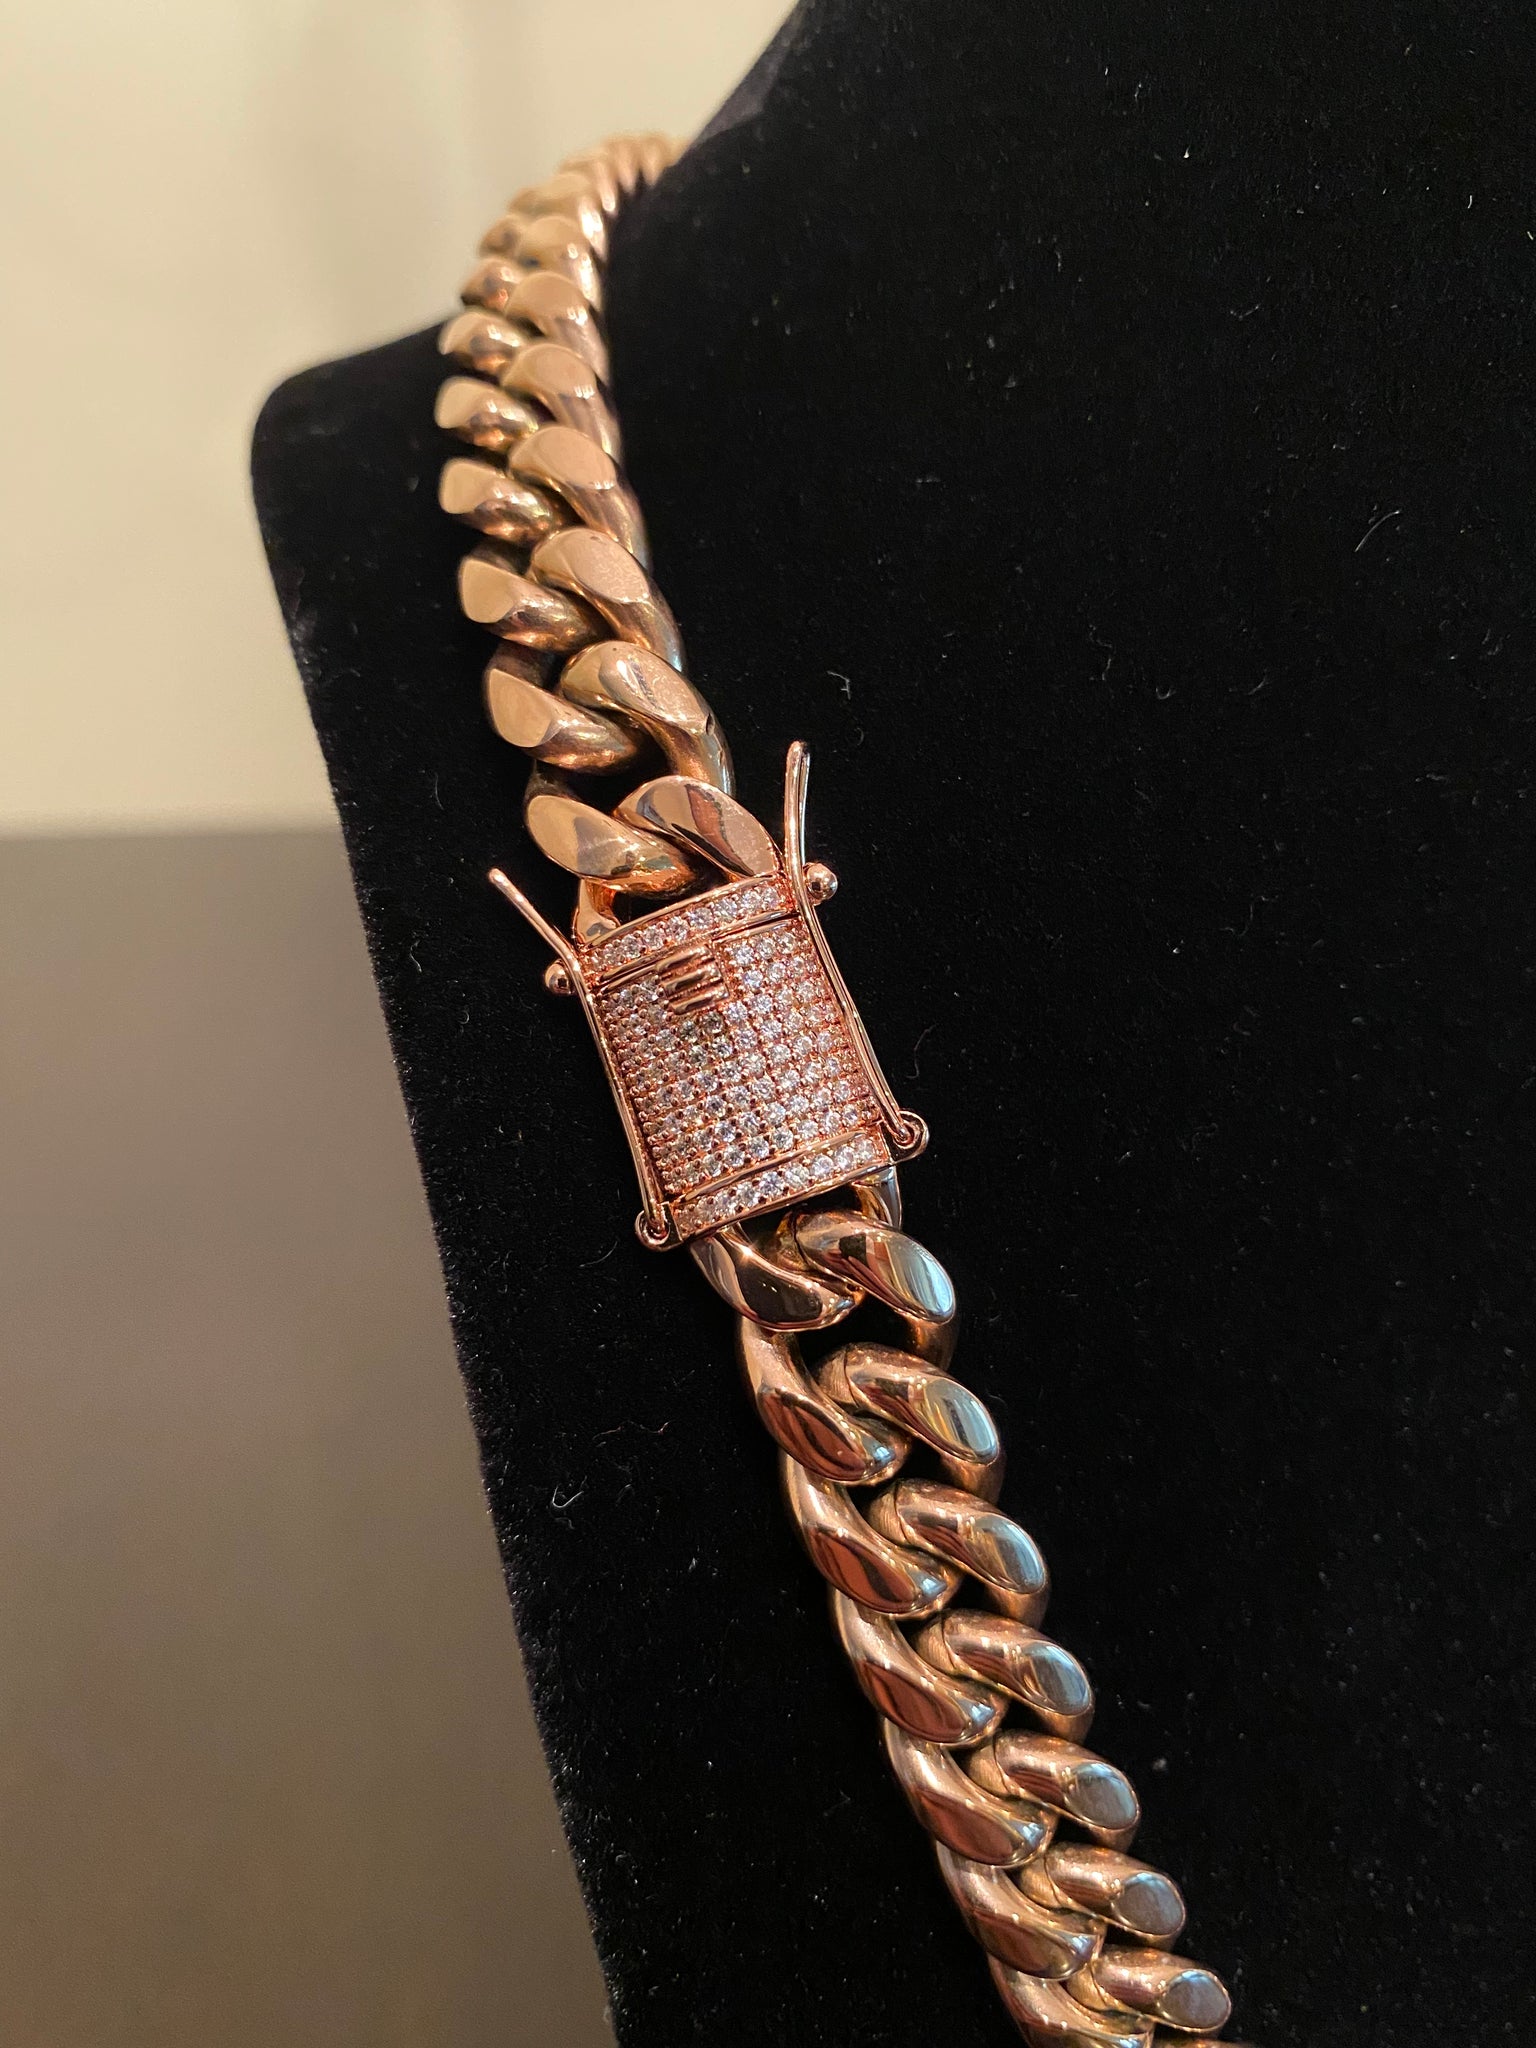 12mm Solid Miami Cuban Gold Diamond Lock Necklace